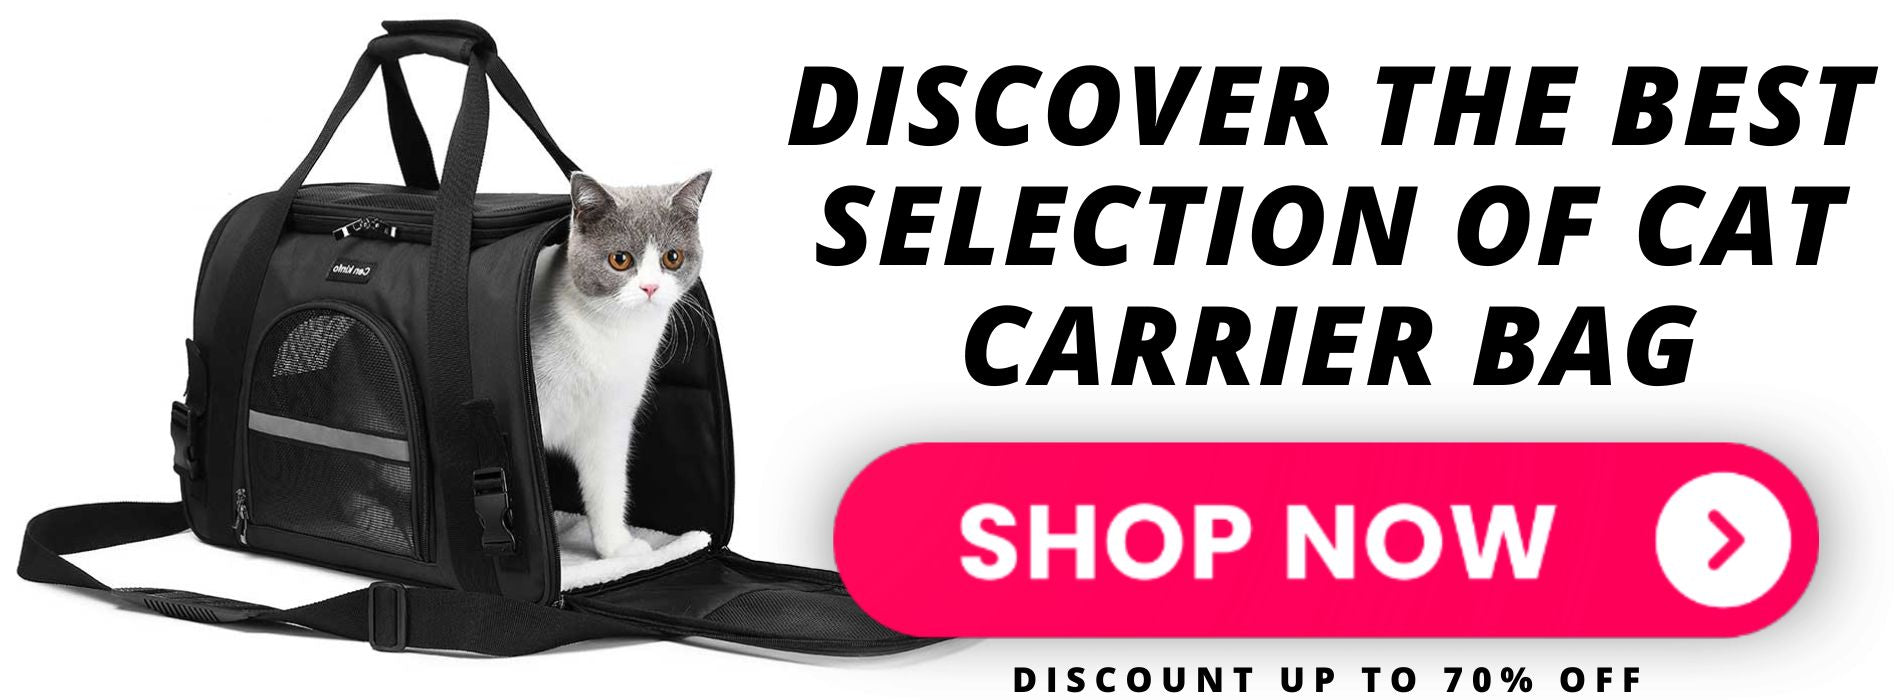 cat-carrier-bag